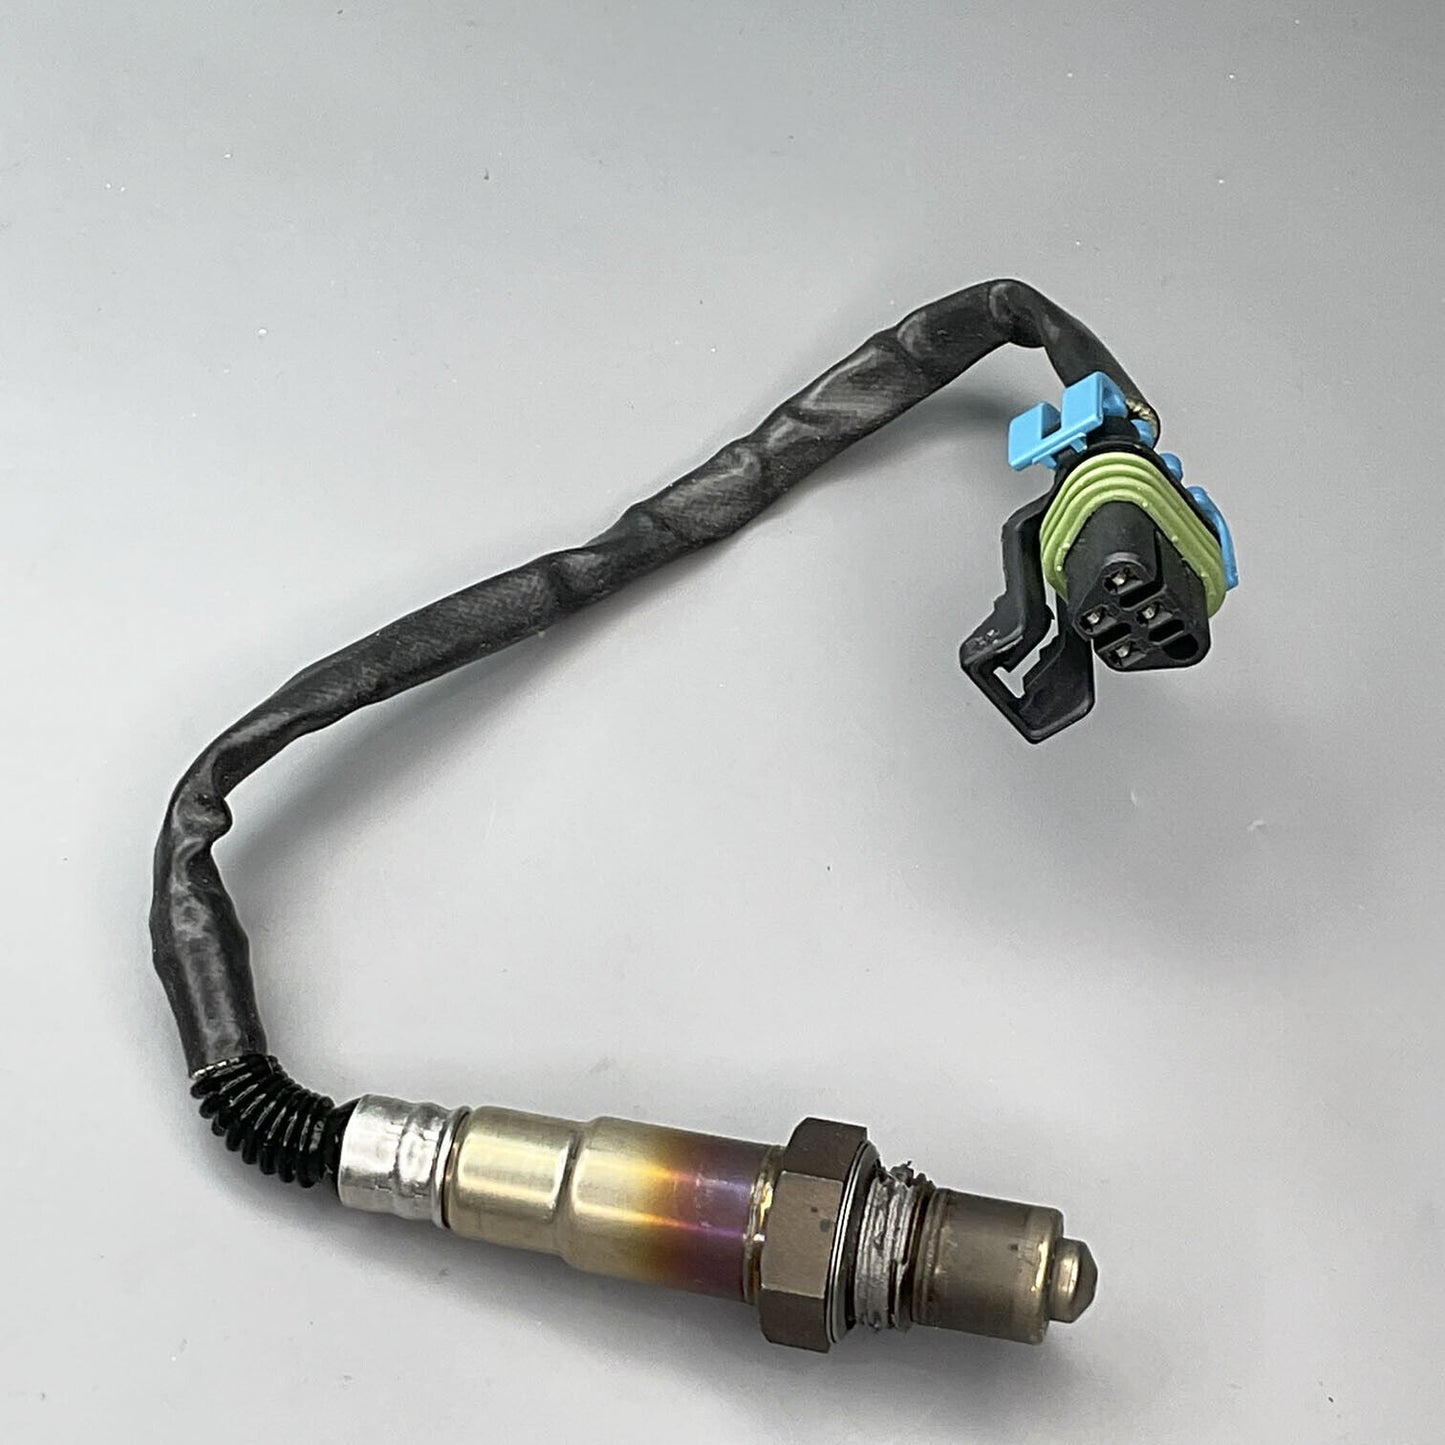 OE GENUINE Lambda Oxygen Sensor 16717 For Buick LaCrosse Rendezvous Allure